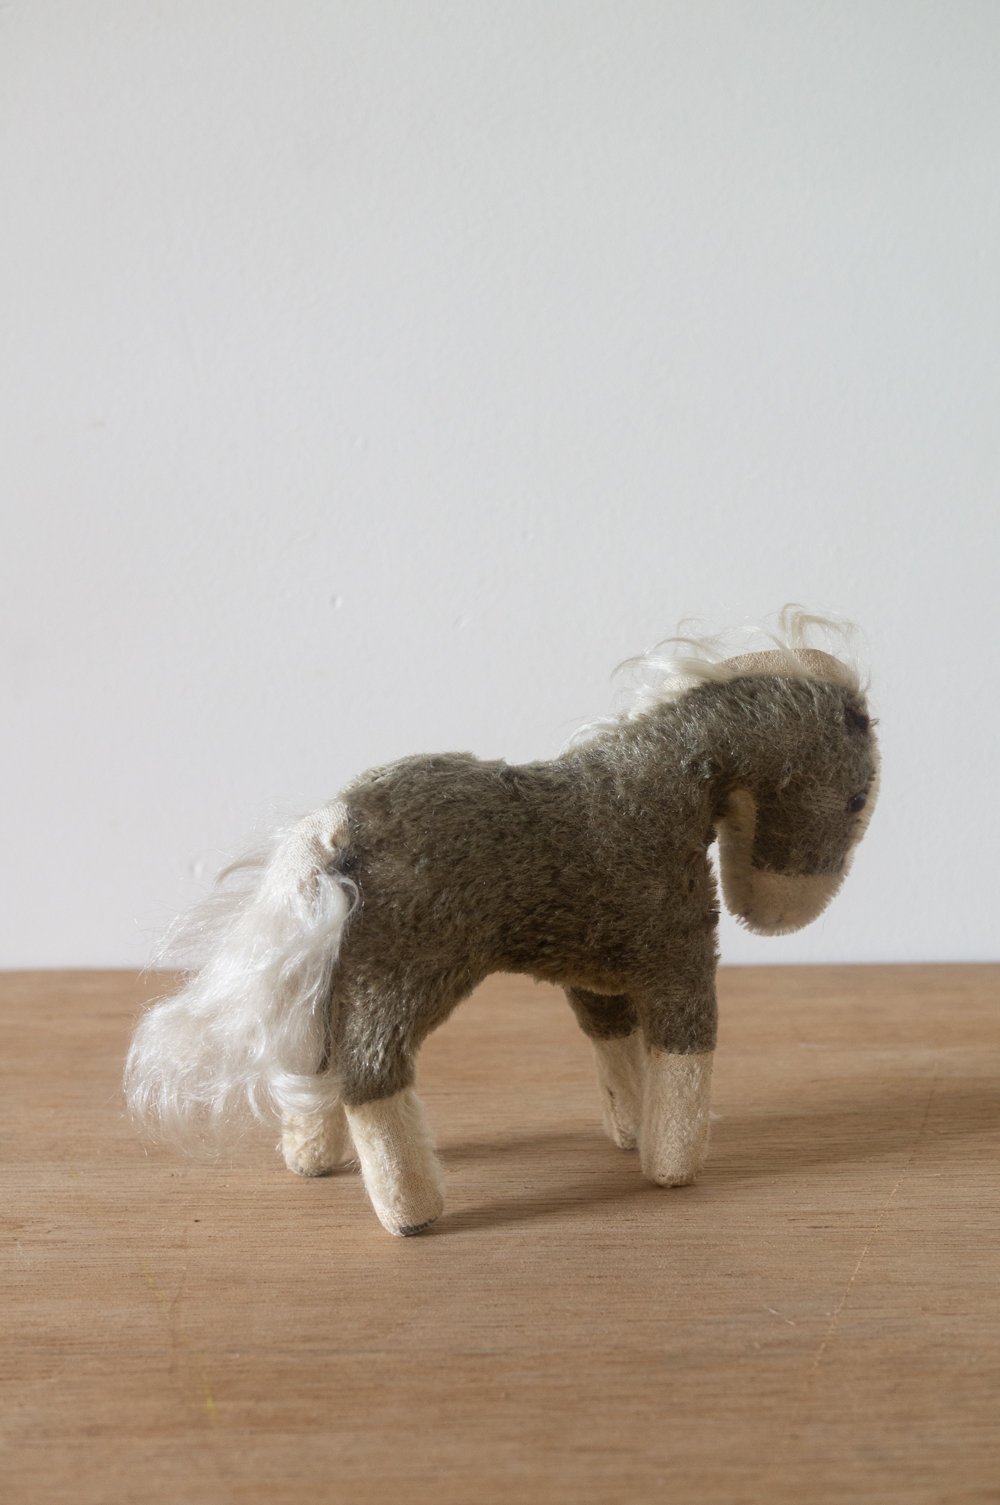 Image of little pony